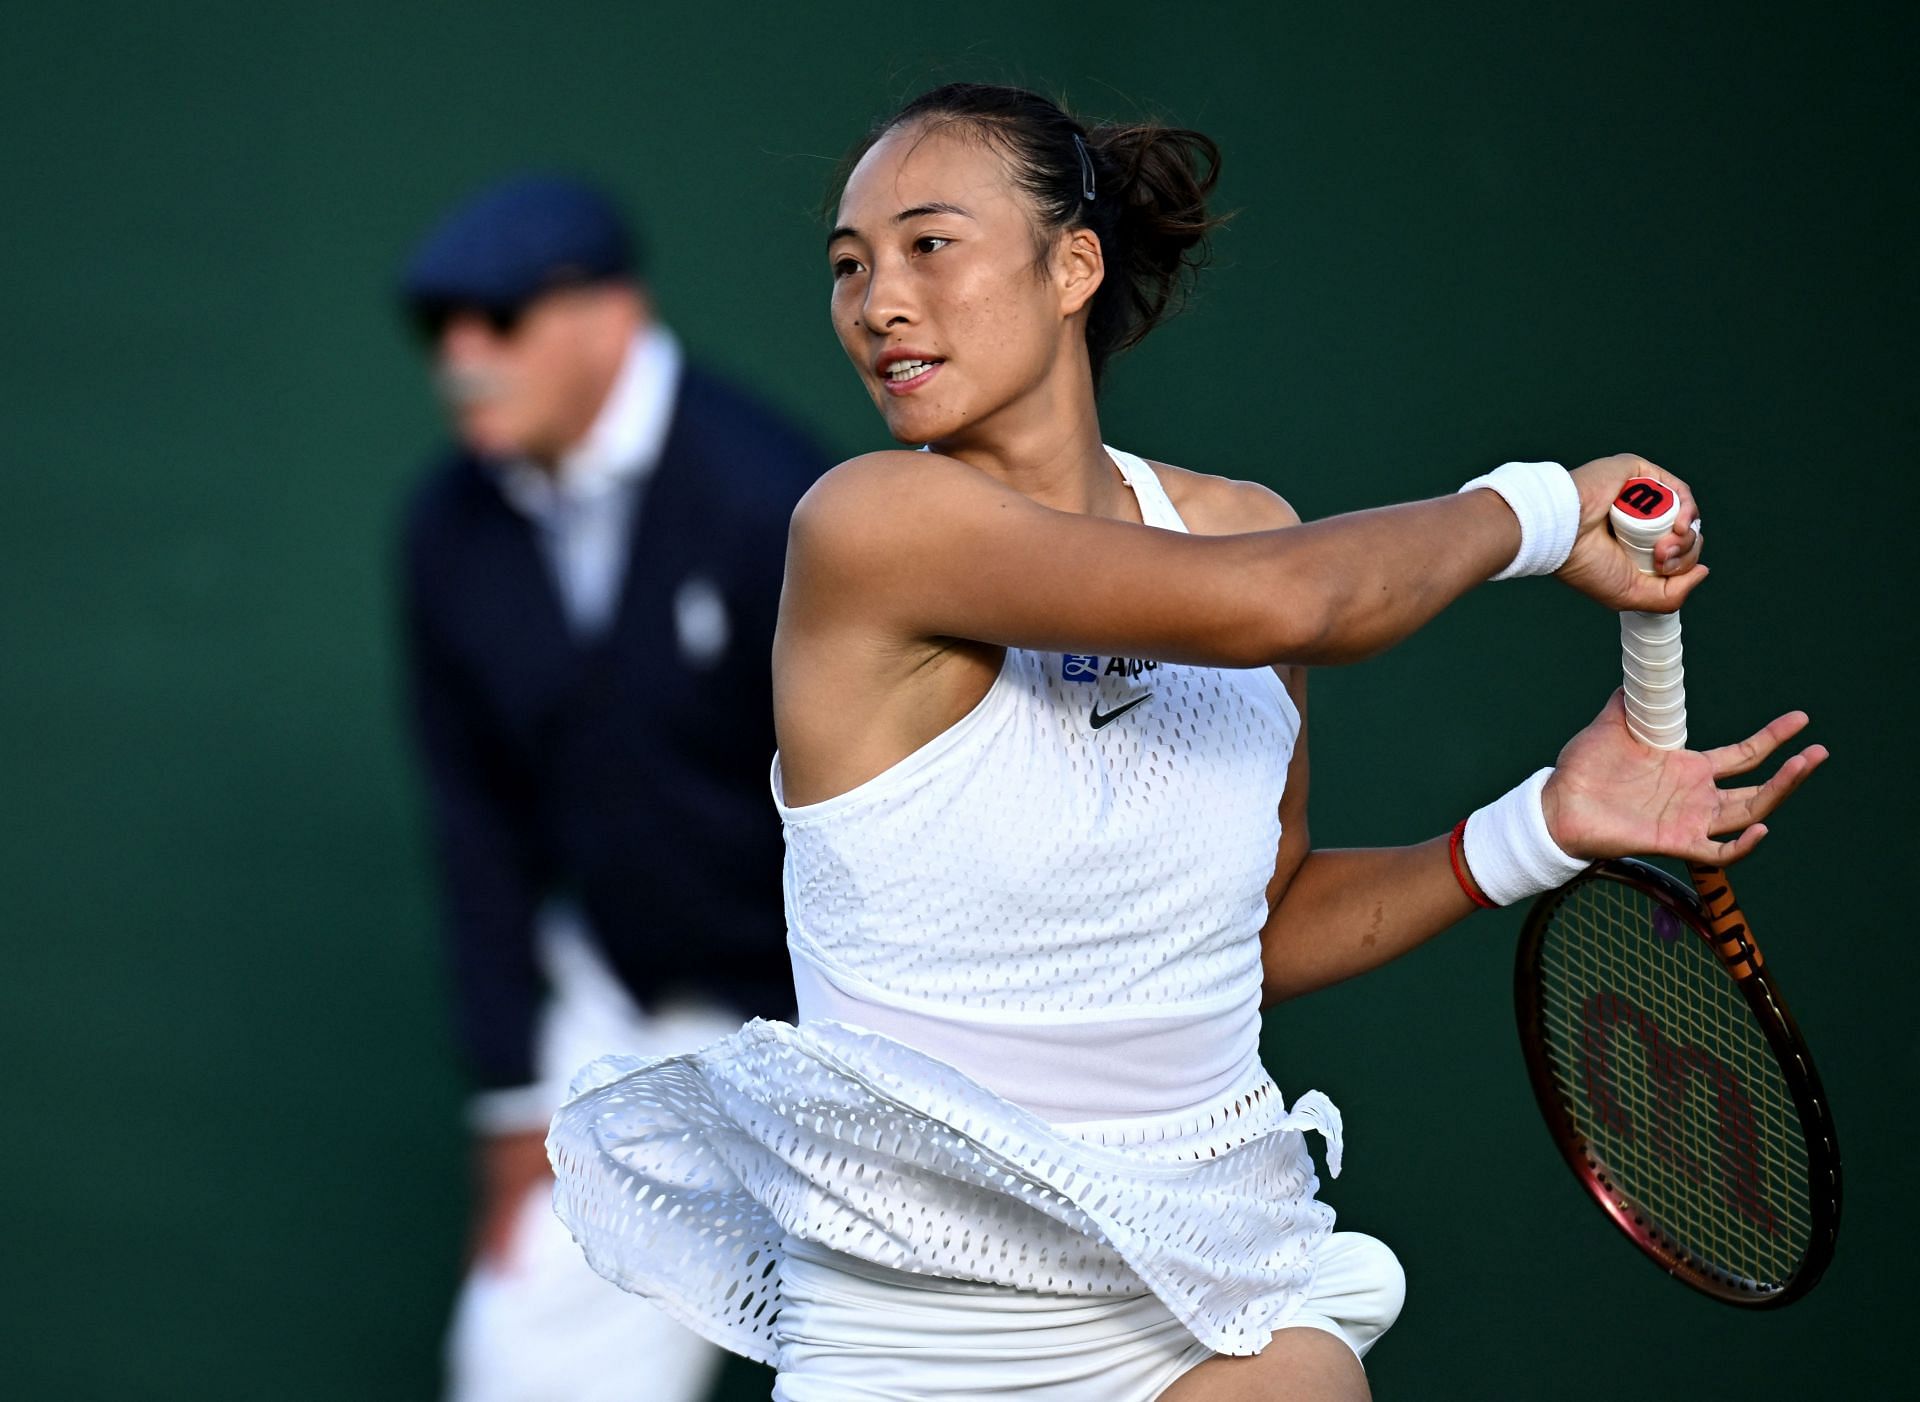 Zheng Qinwen hits a forehand at Wimbledon.